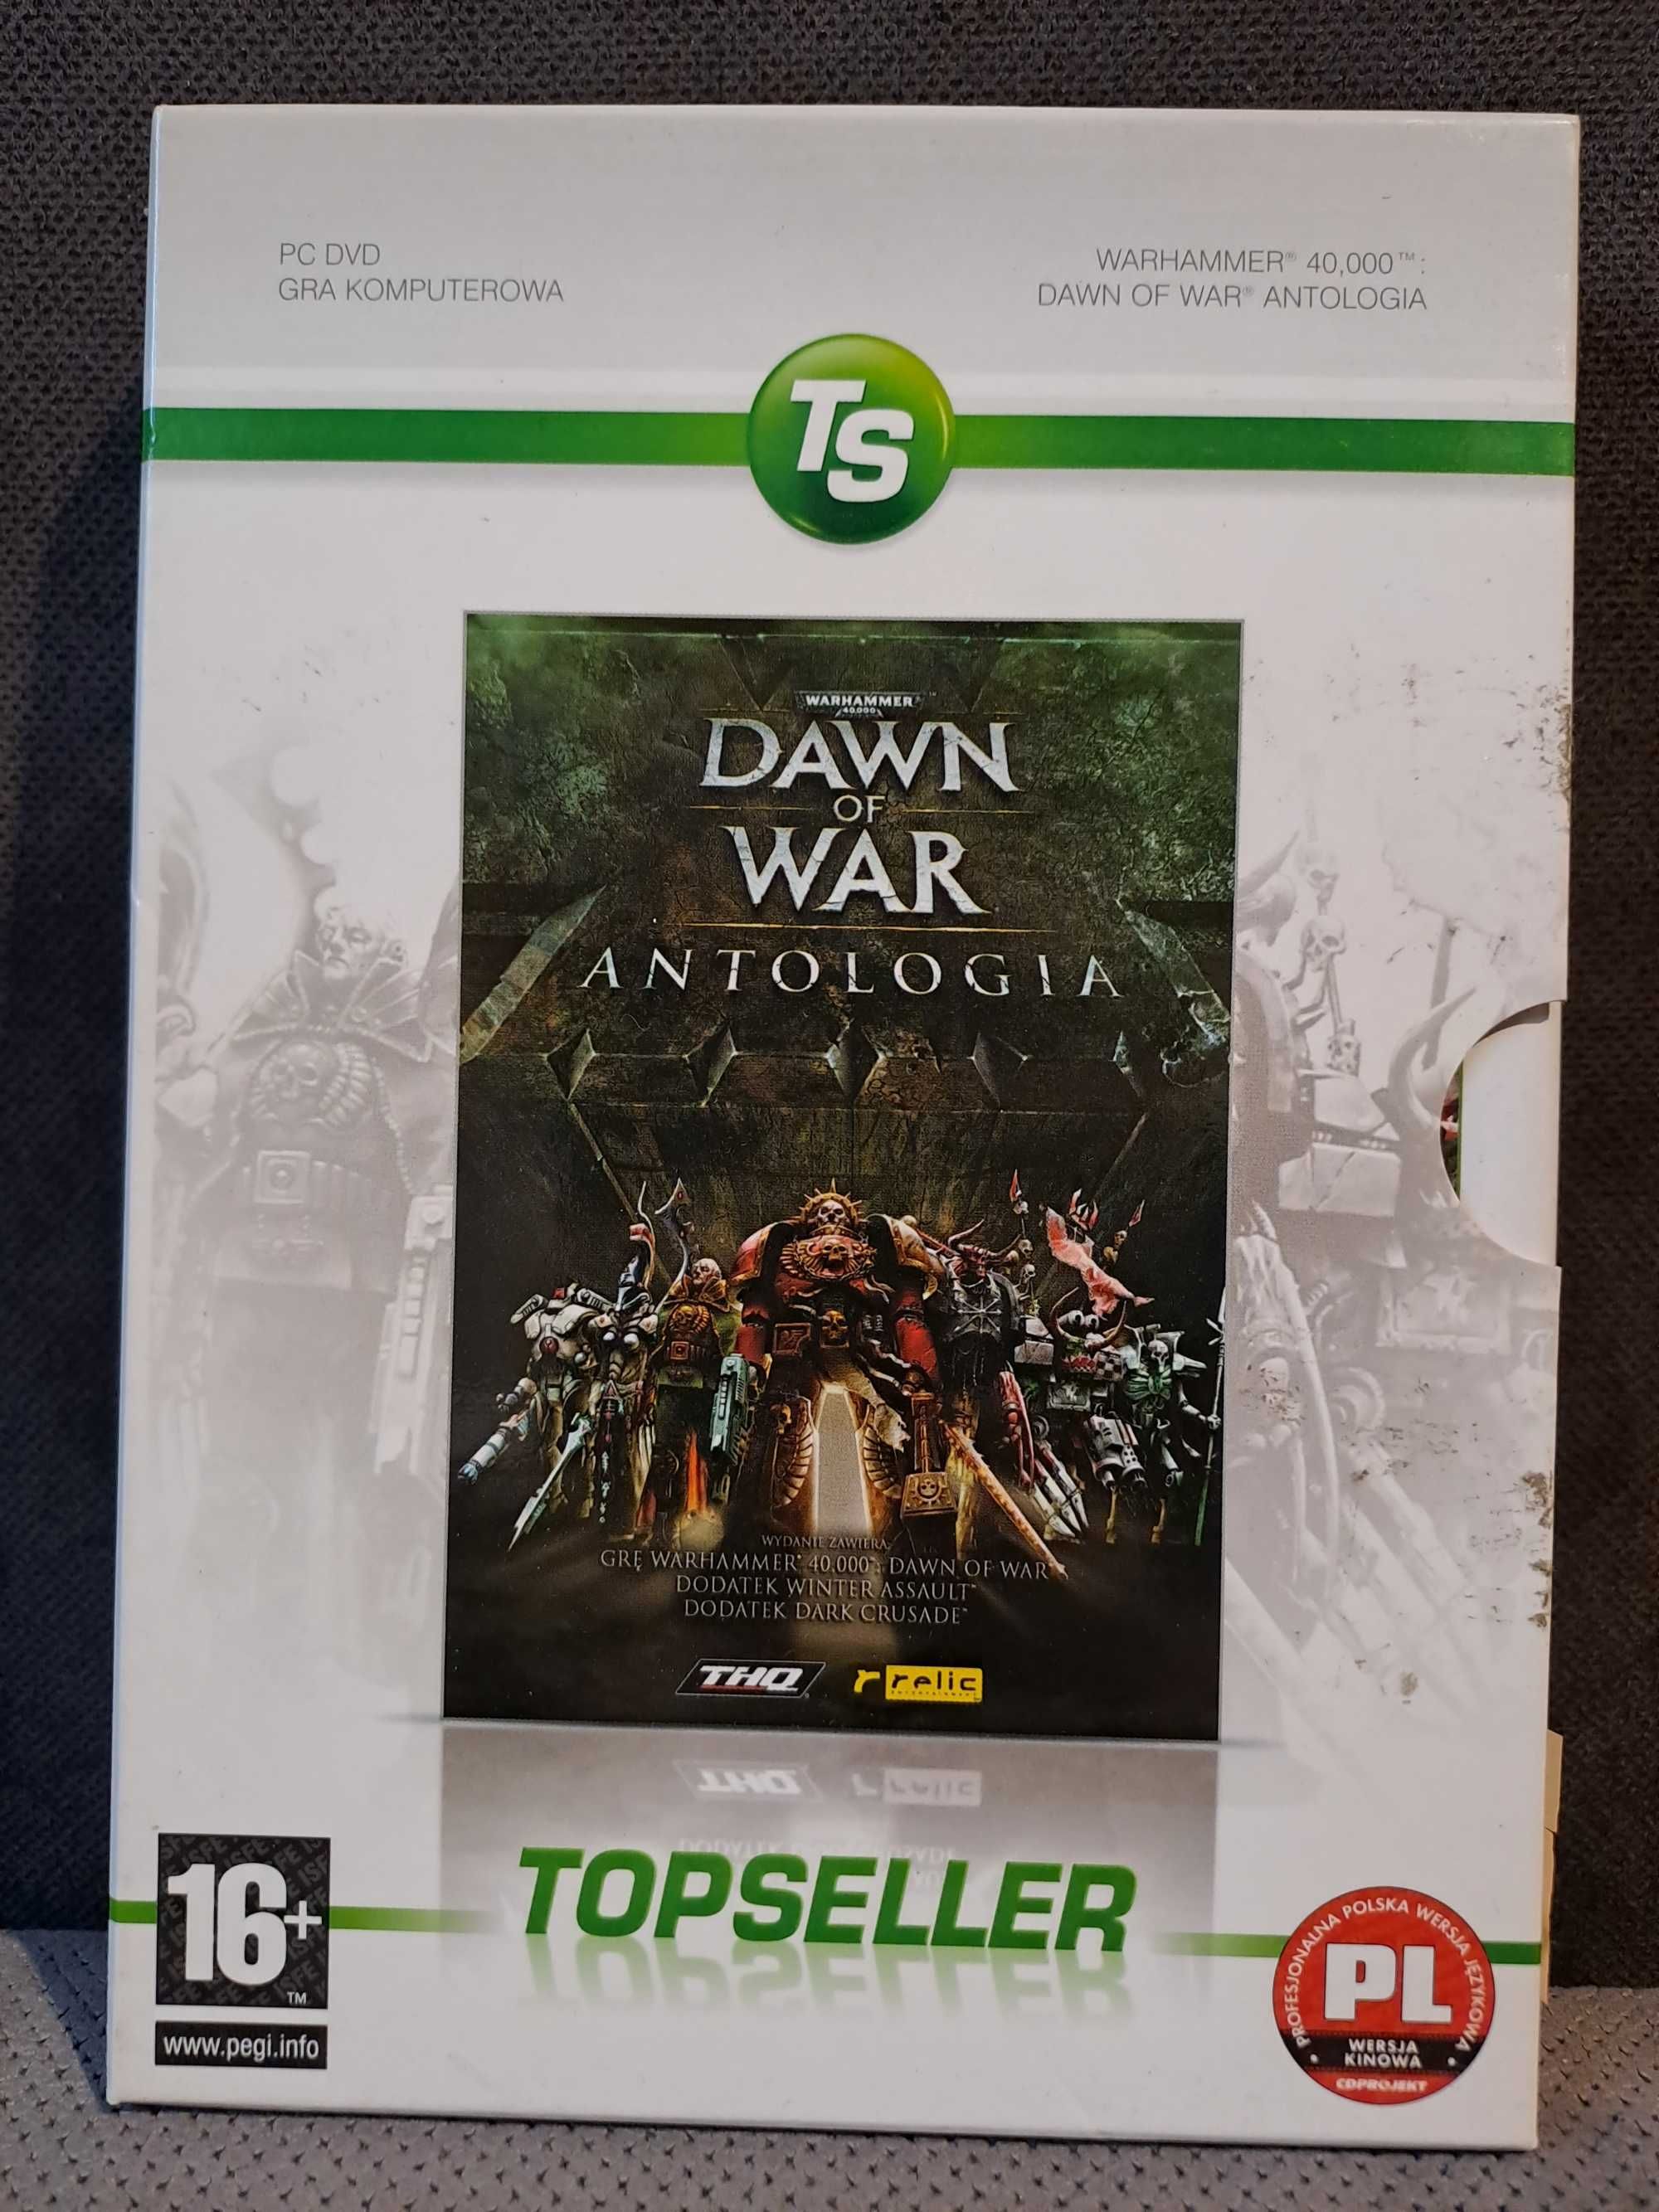 Warhammer 40,000 Dawn of War Antologia PC